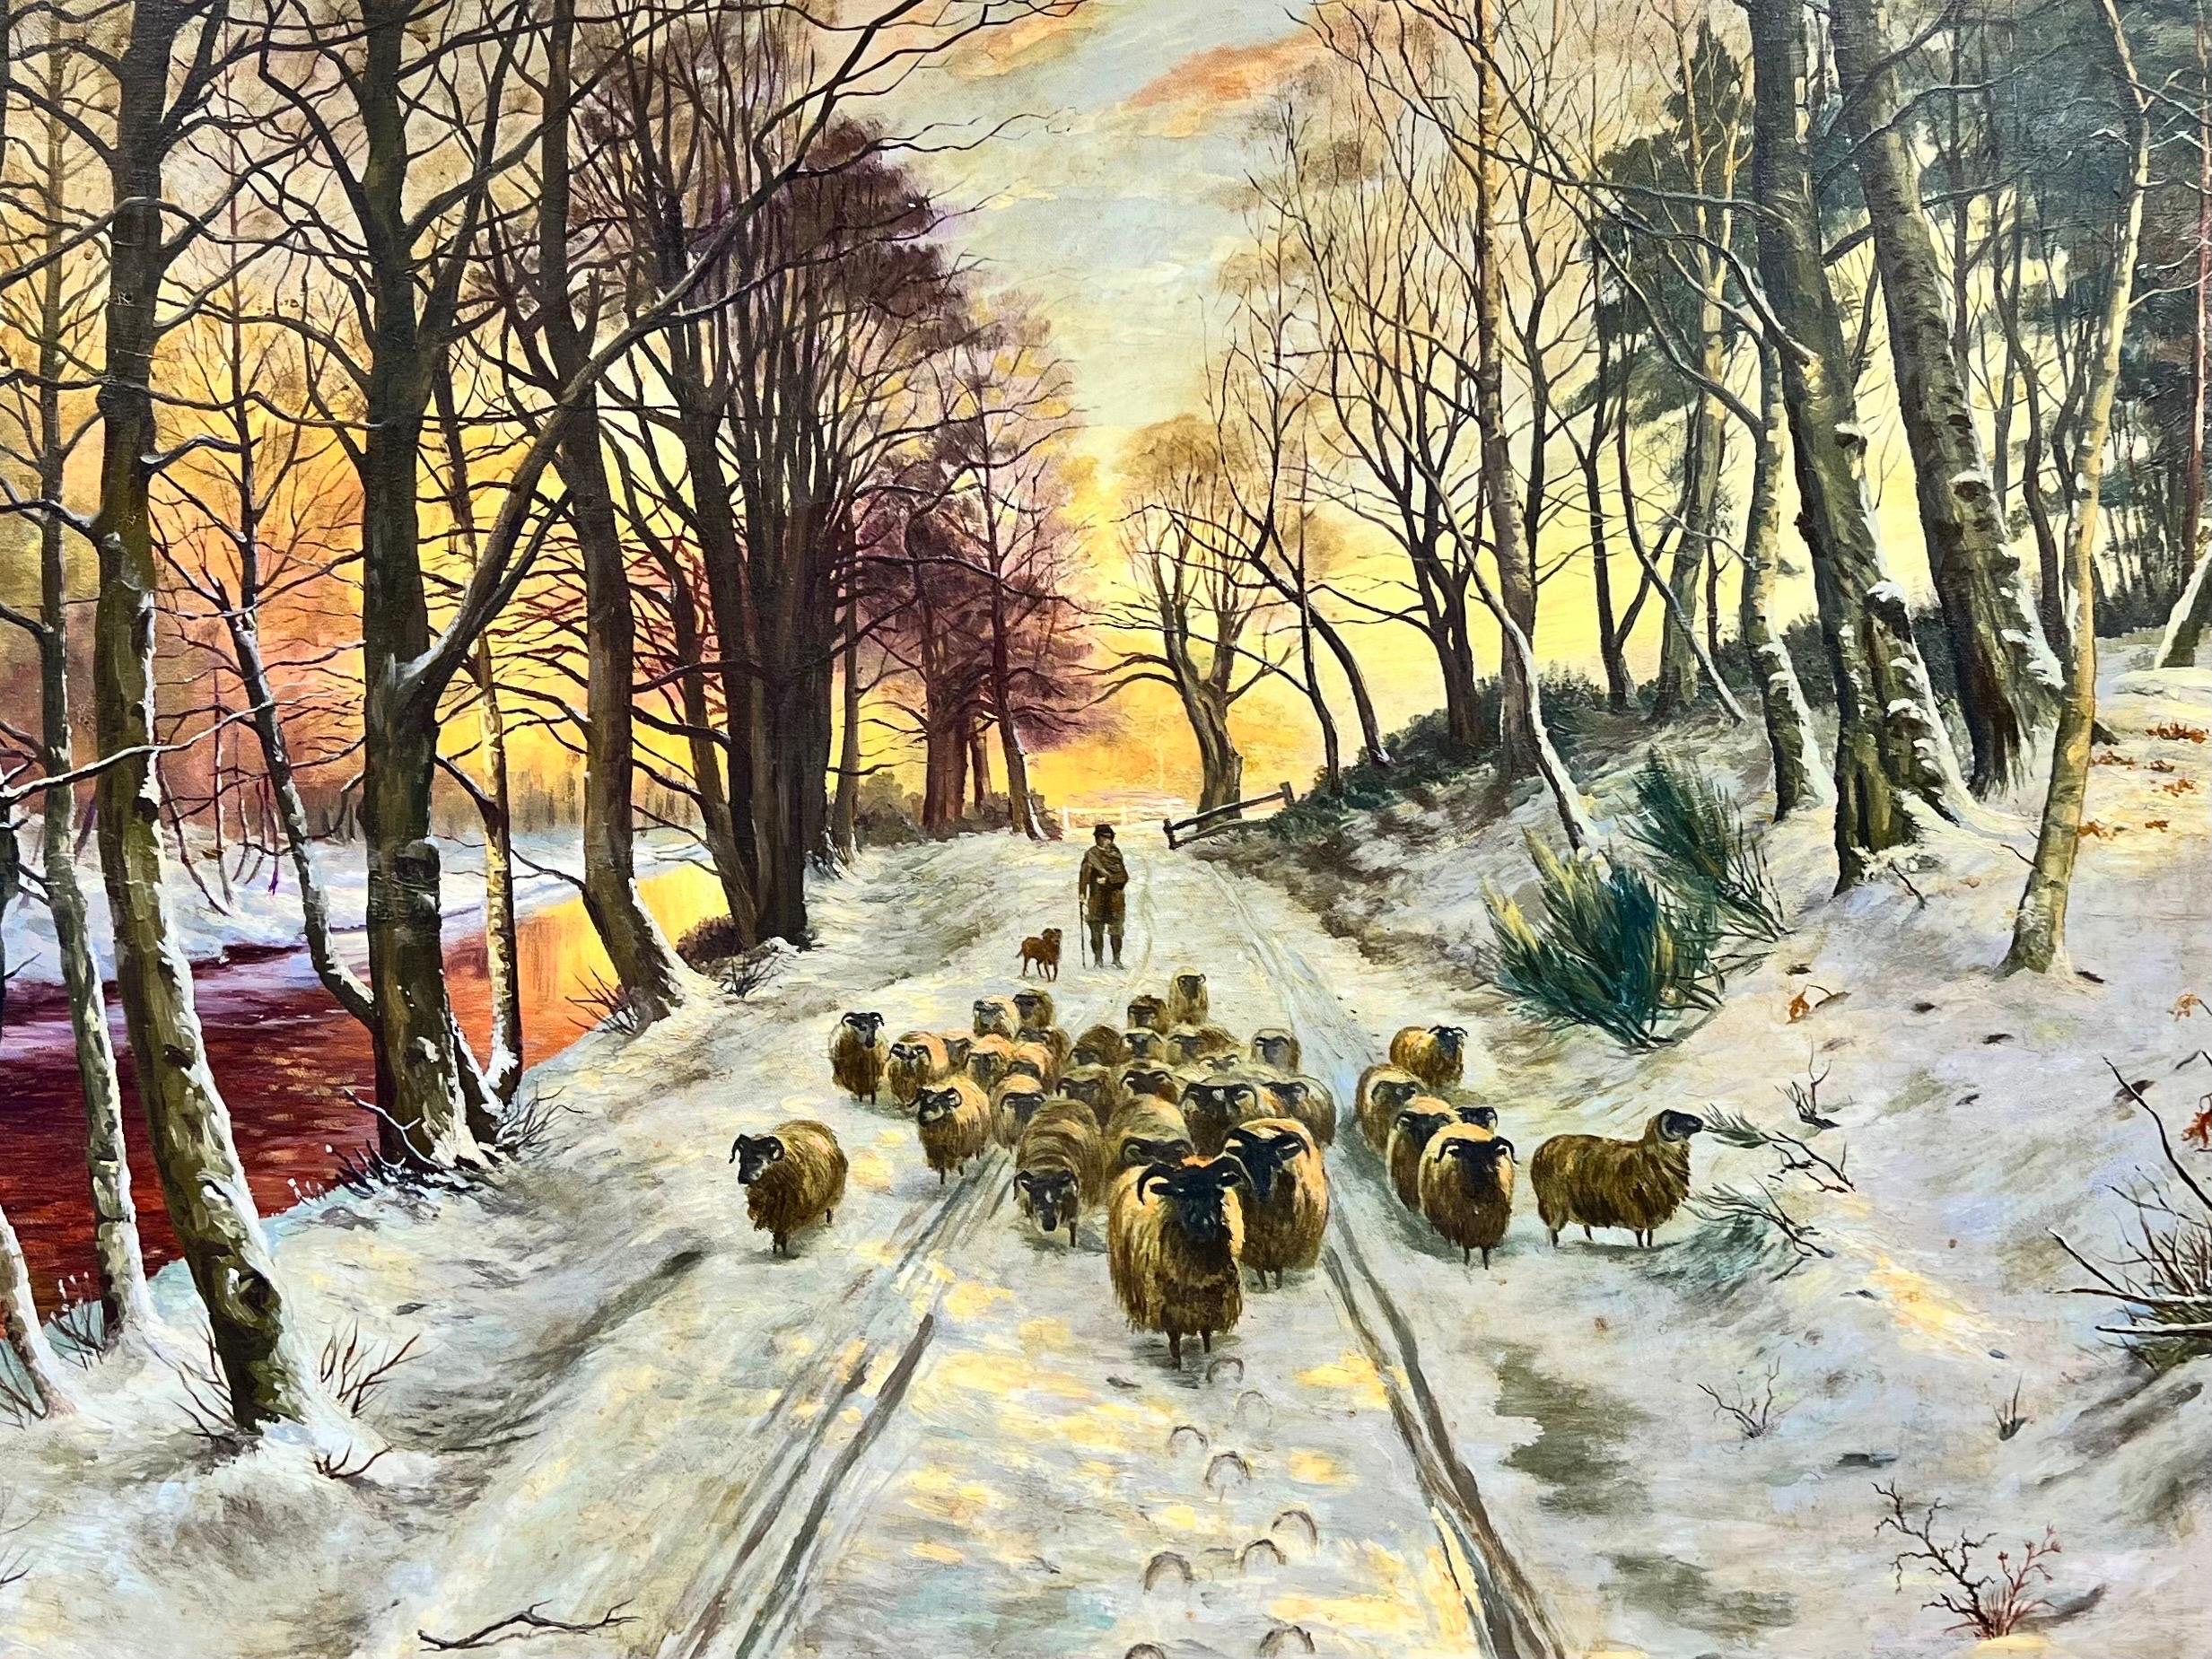 Scottish School Landscape Painting - Huge Scottish Signed Painting Sheep in Winter Snowy Sunset Landscape